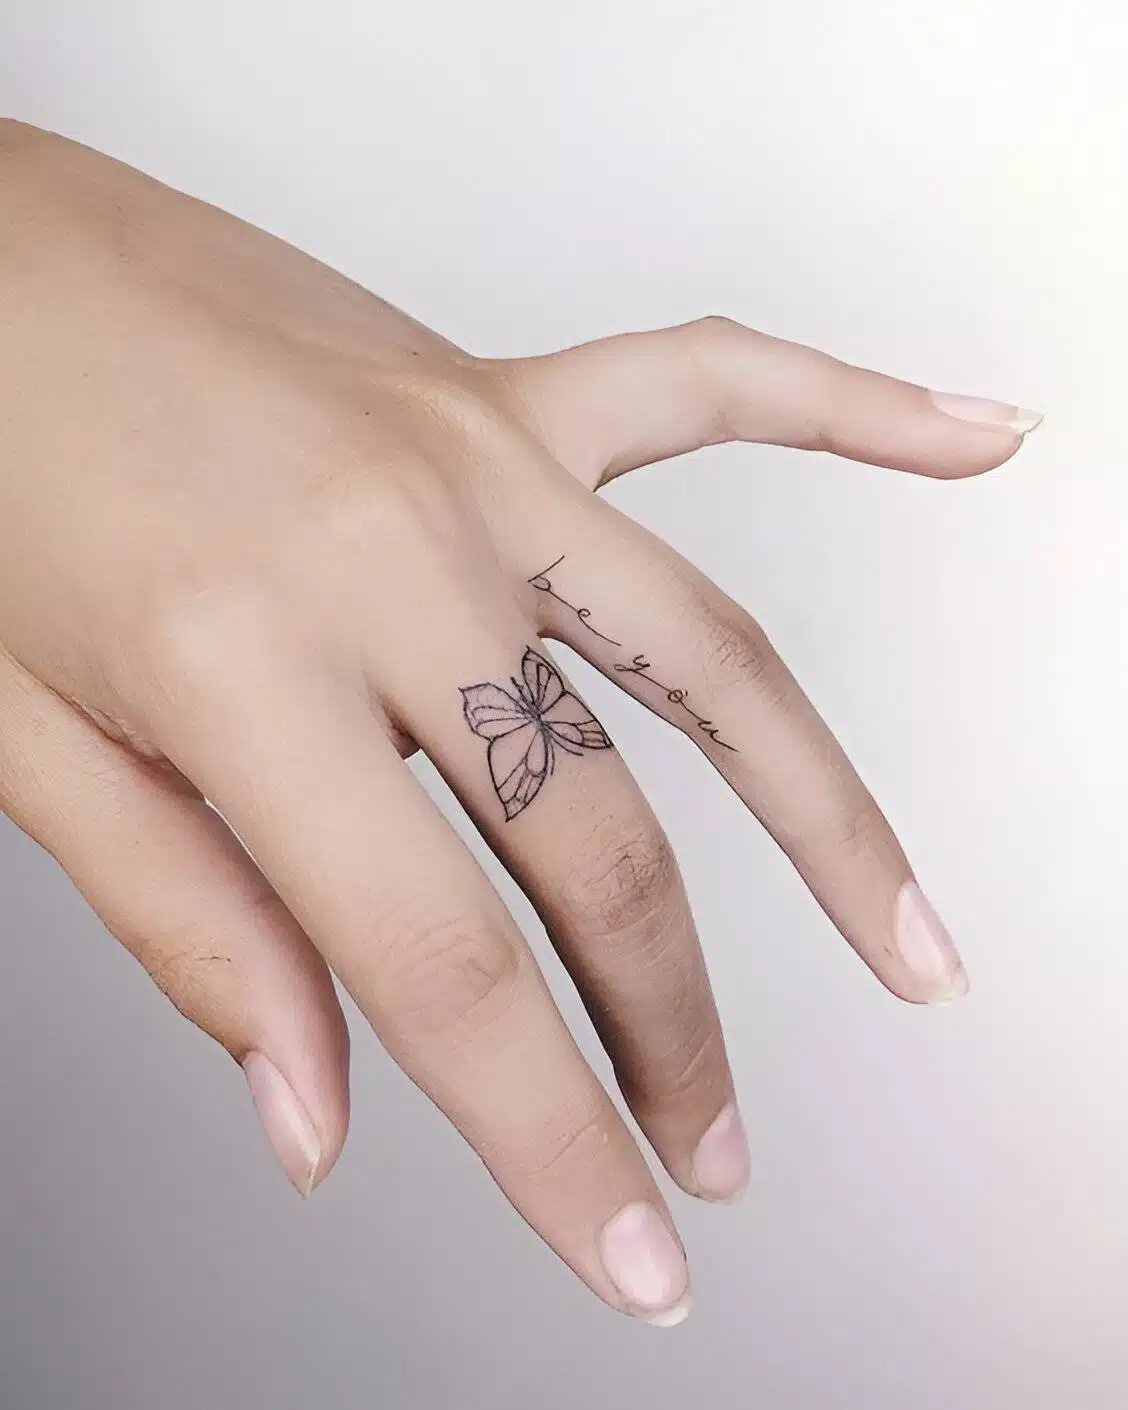 25 Feminine Tattoo Ideas That Are Small But Oh So Pretty - 209